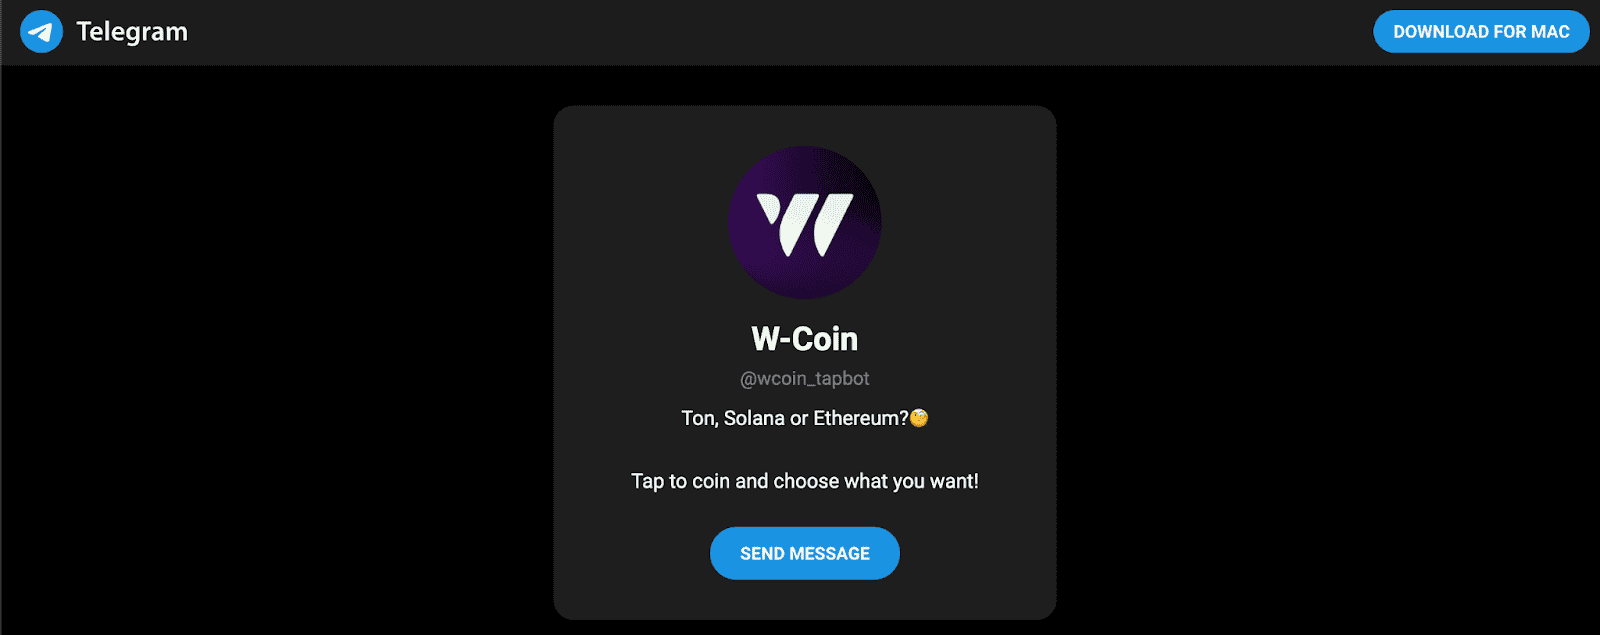 w-coin telegram